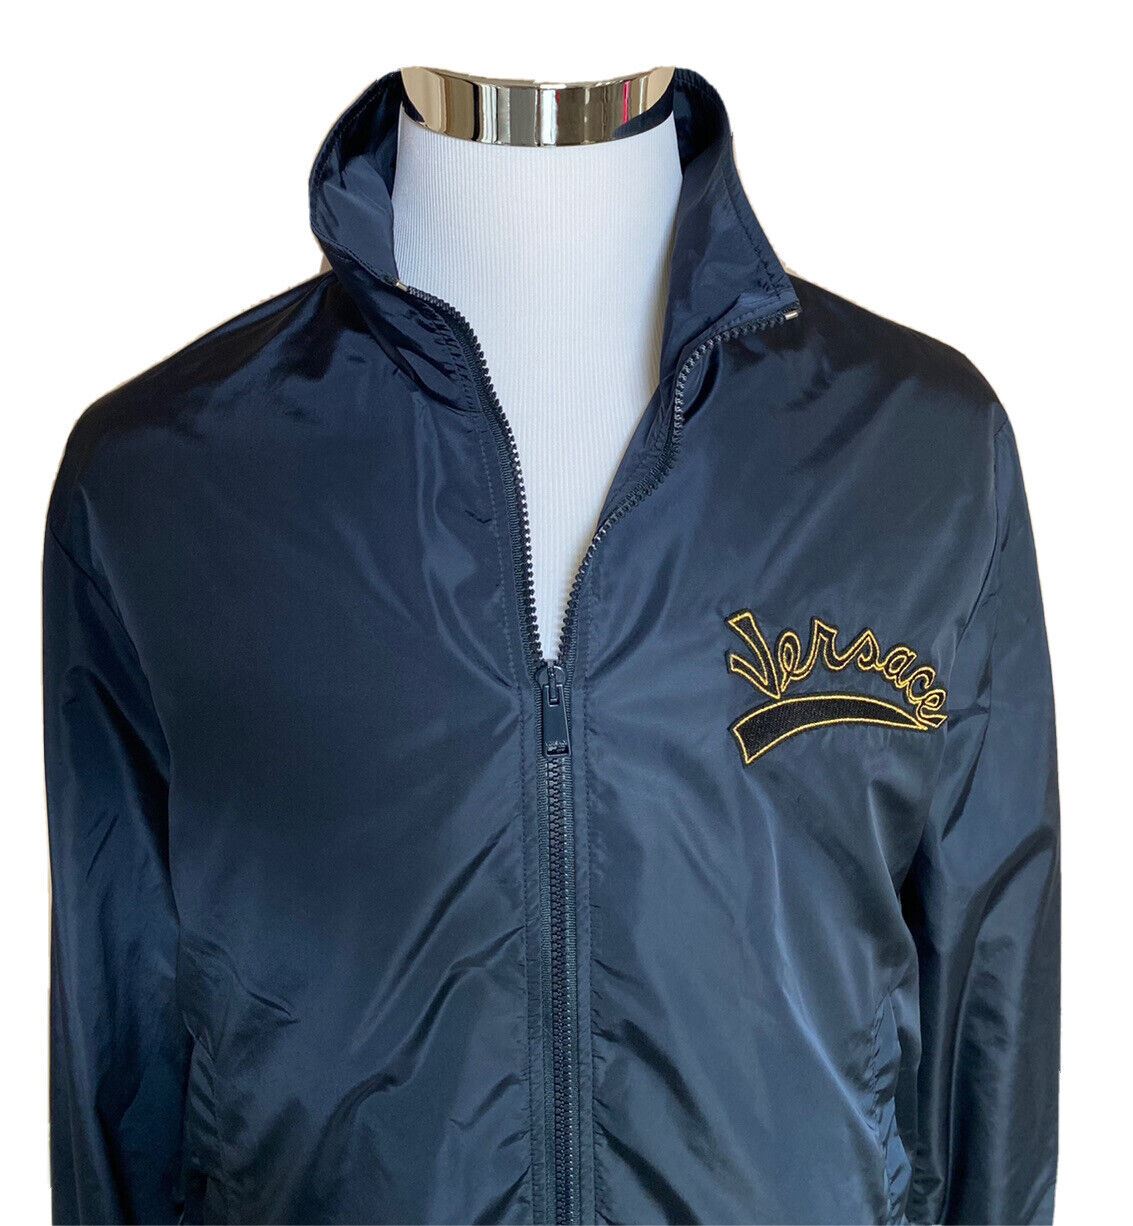 NWT $1200 Versace Men's Jacket Windbreaker Blue 44 US (54 Euro) A87022S Italy